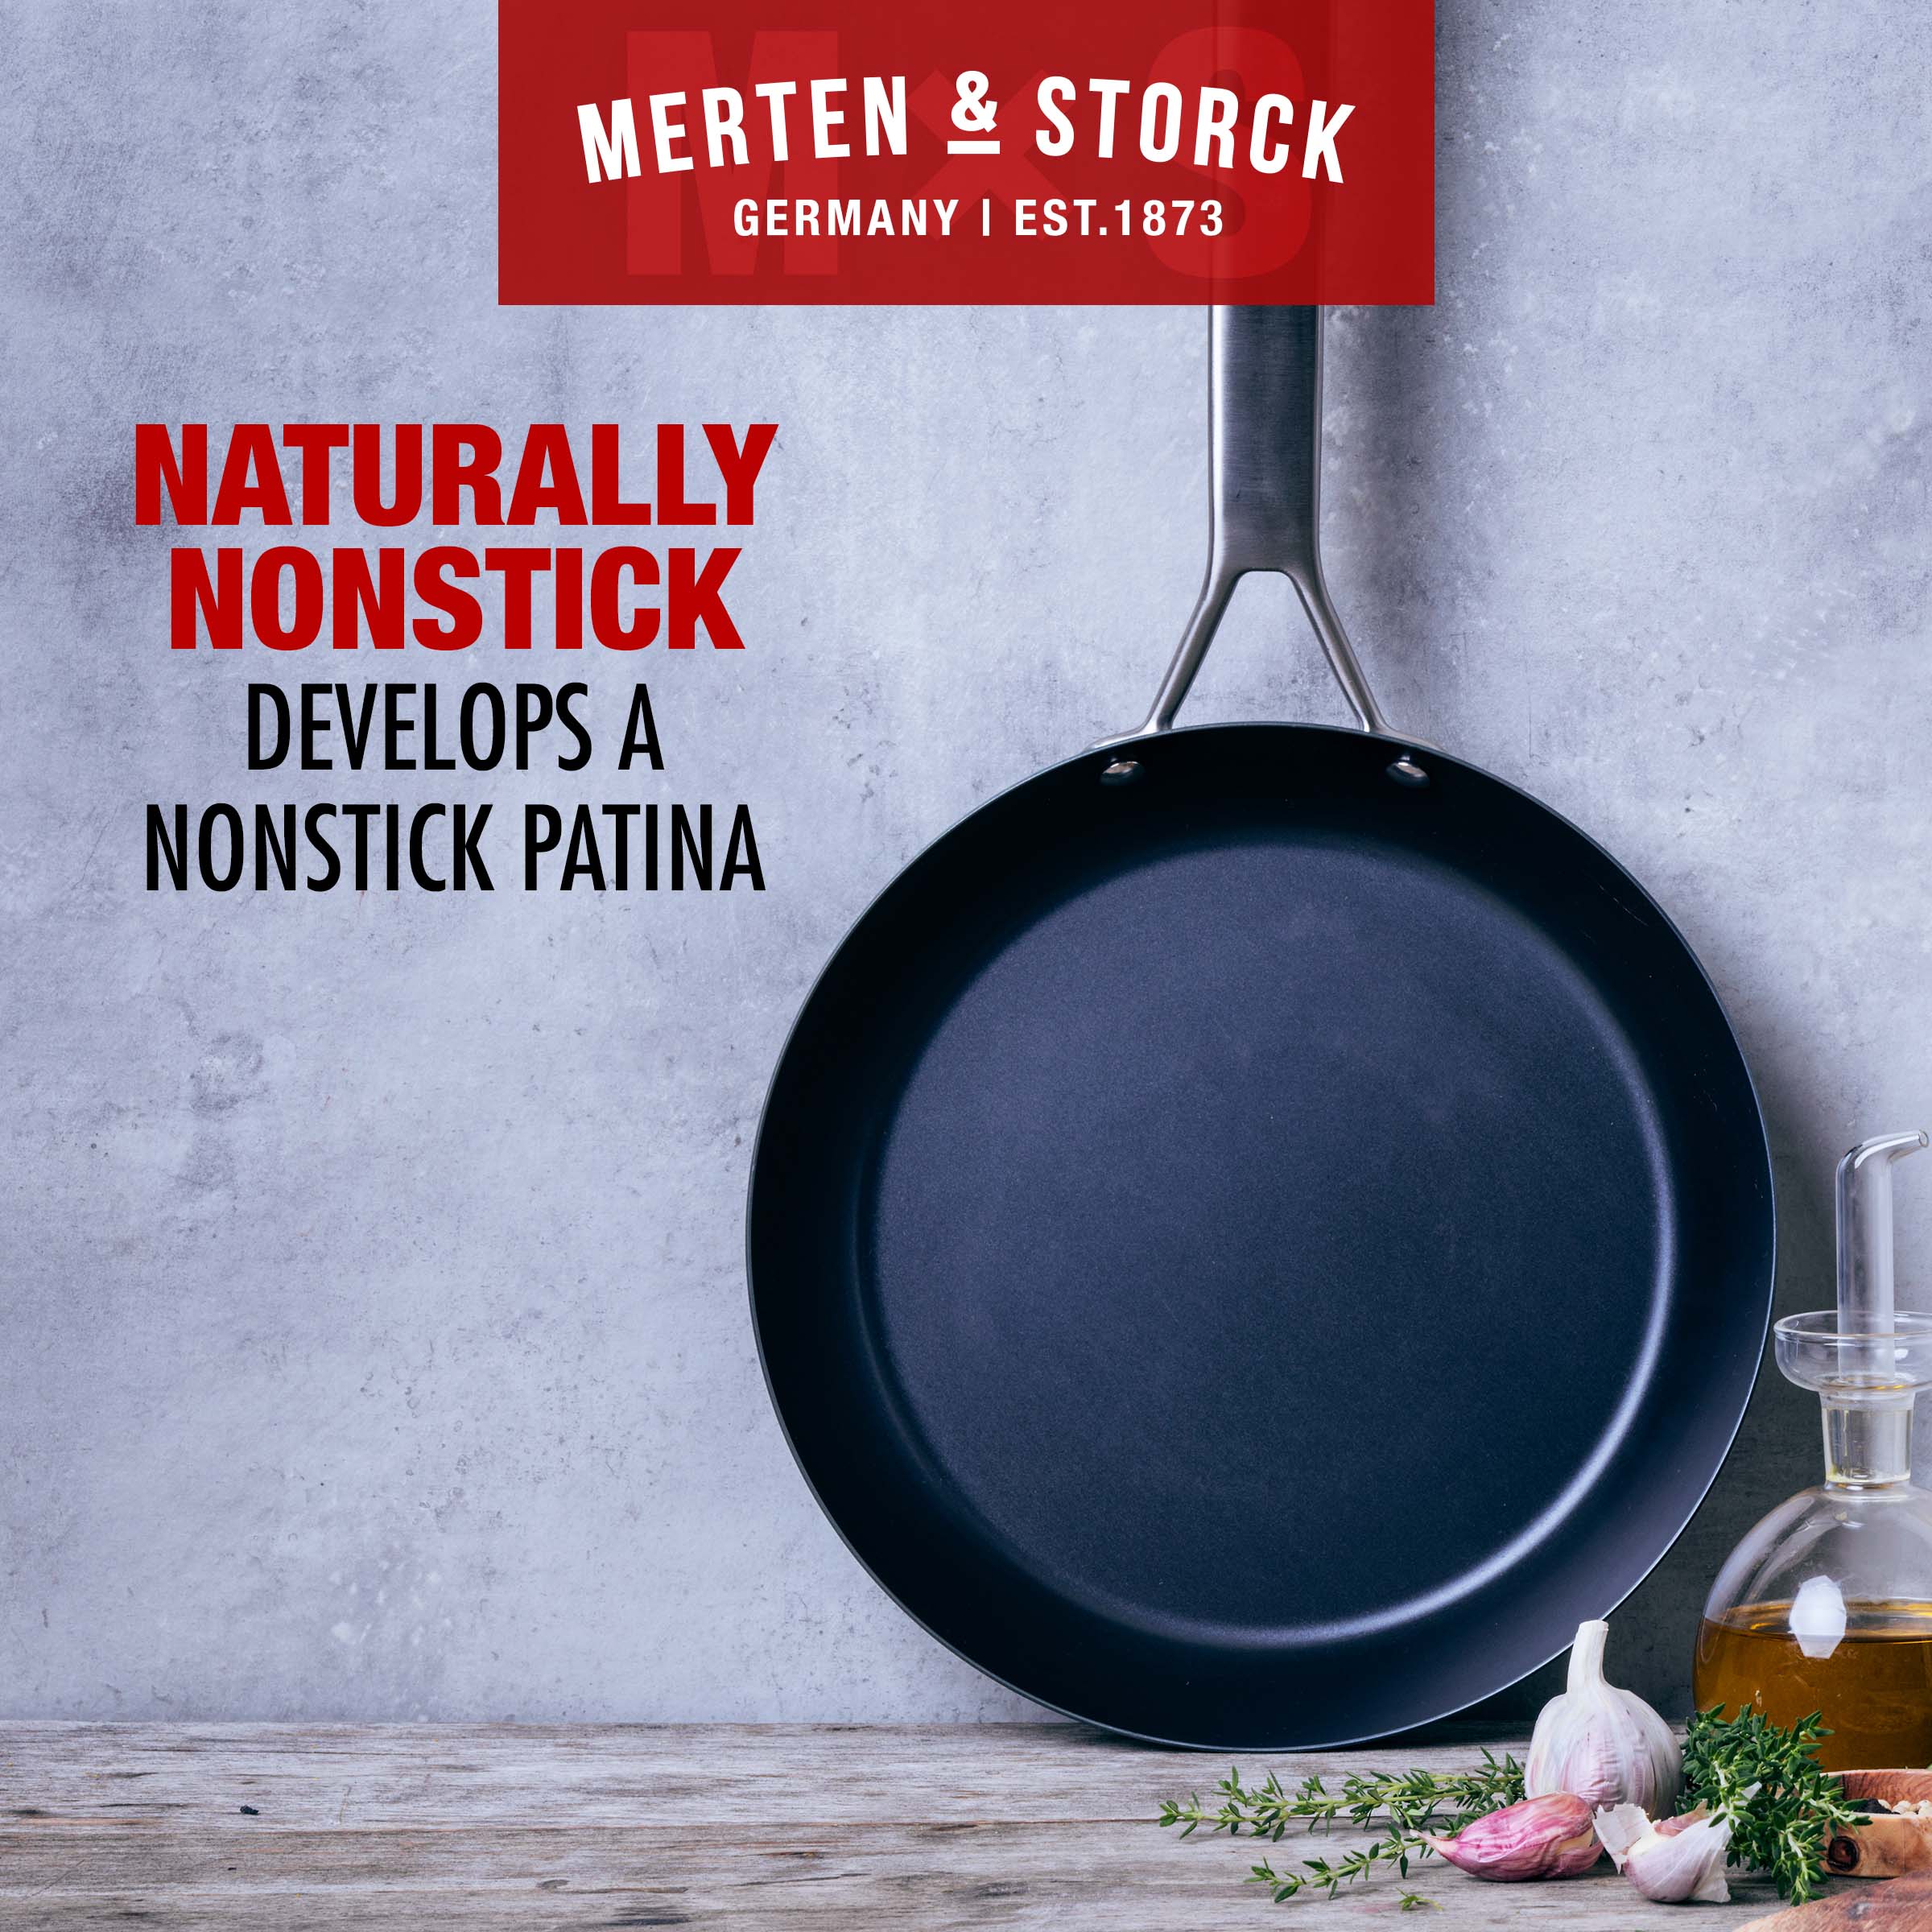 Merten & Storck Pre-Seasoned Carbon Steel Pro Induction 10" Frying Pan Skillet, Black - image 2 of 7